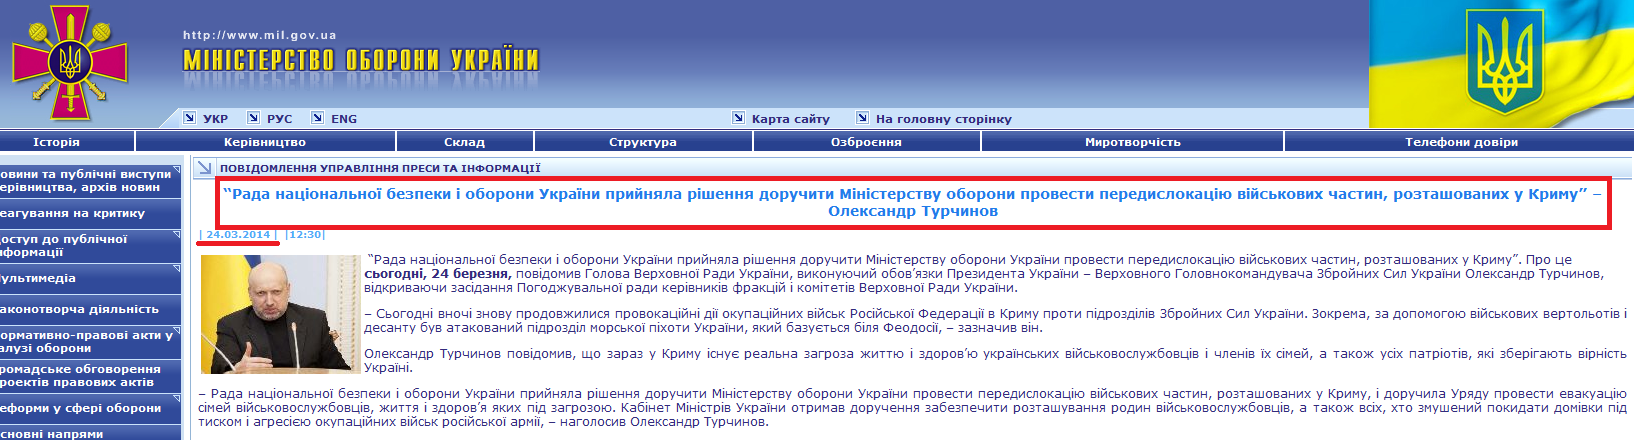 http://www.mil.gov.ua/index.php?lang=ua&part=news&sub=read&id=33264